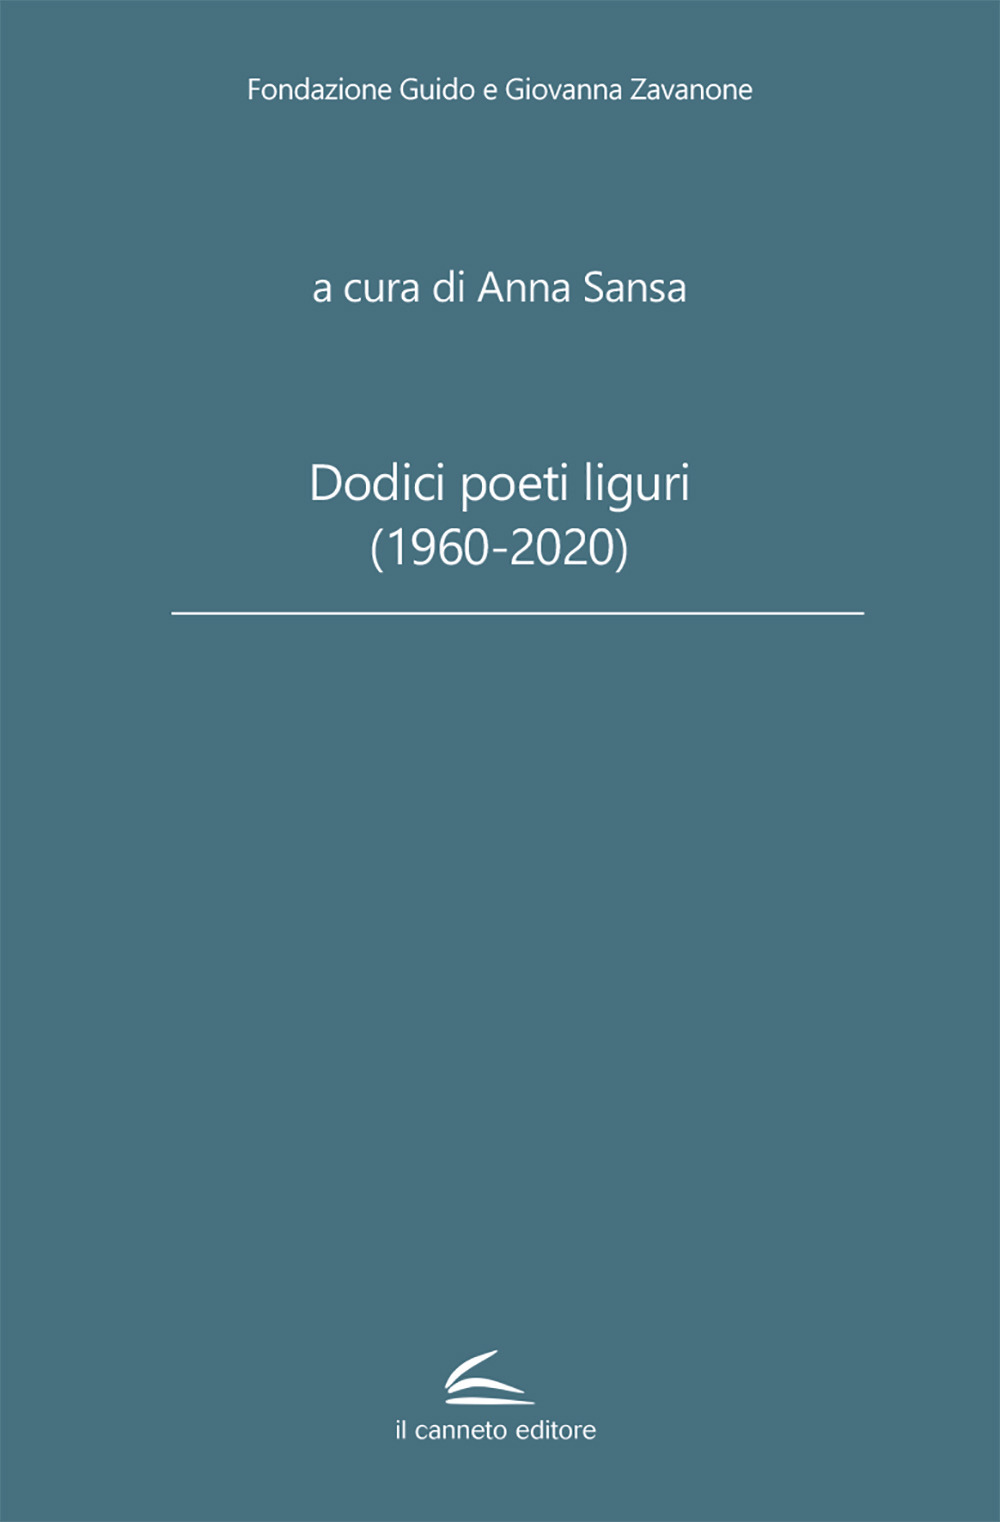 Dodici poeti liguri (1960-2020)